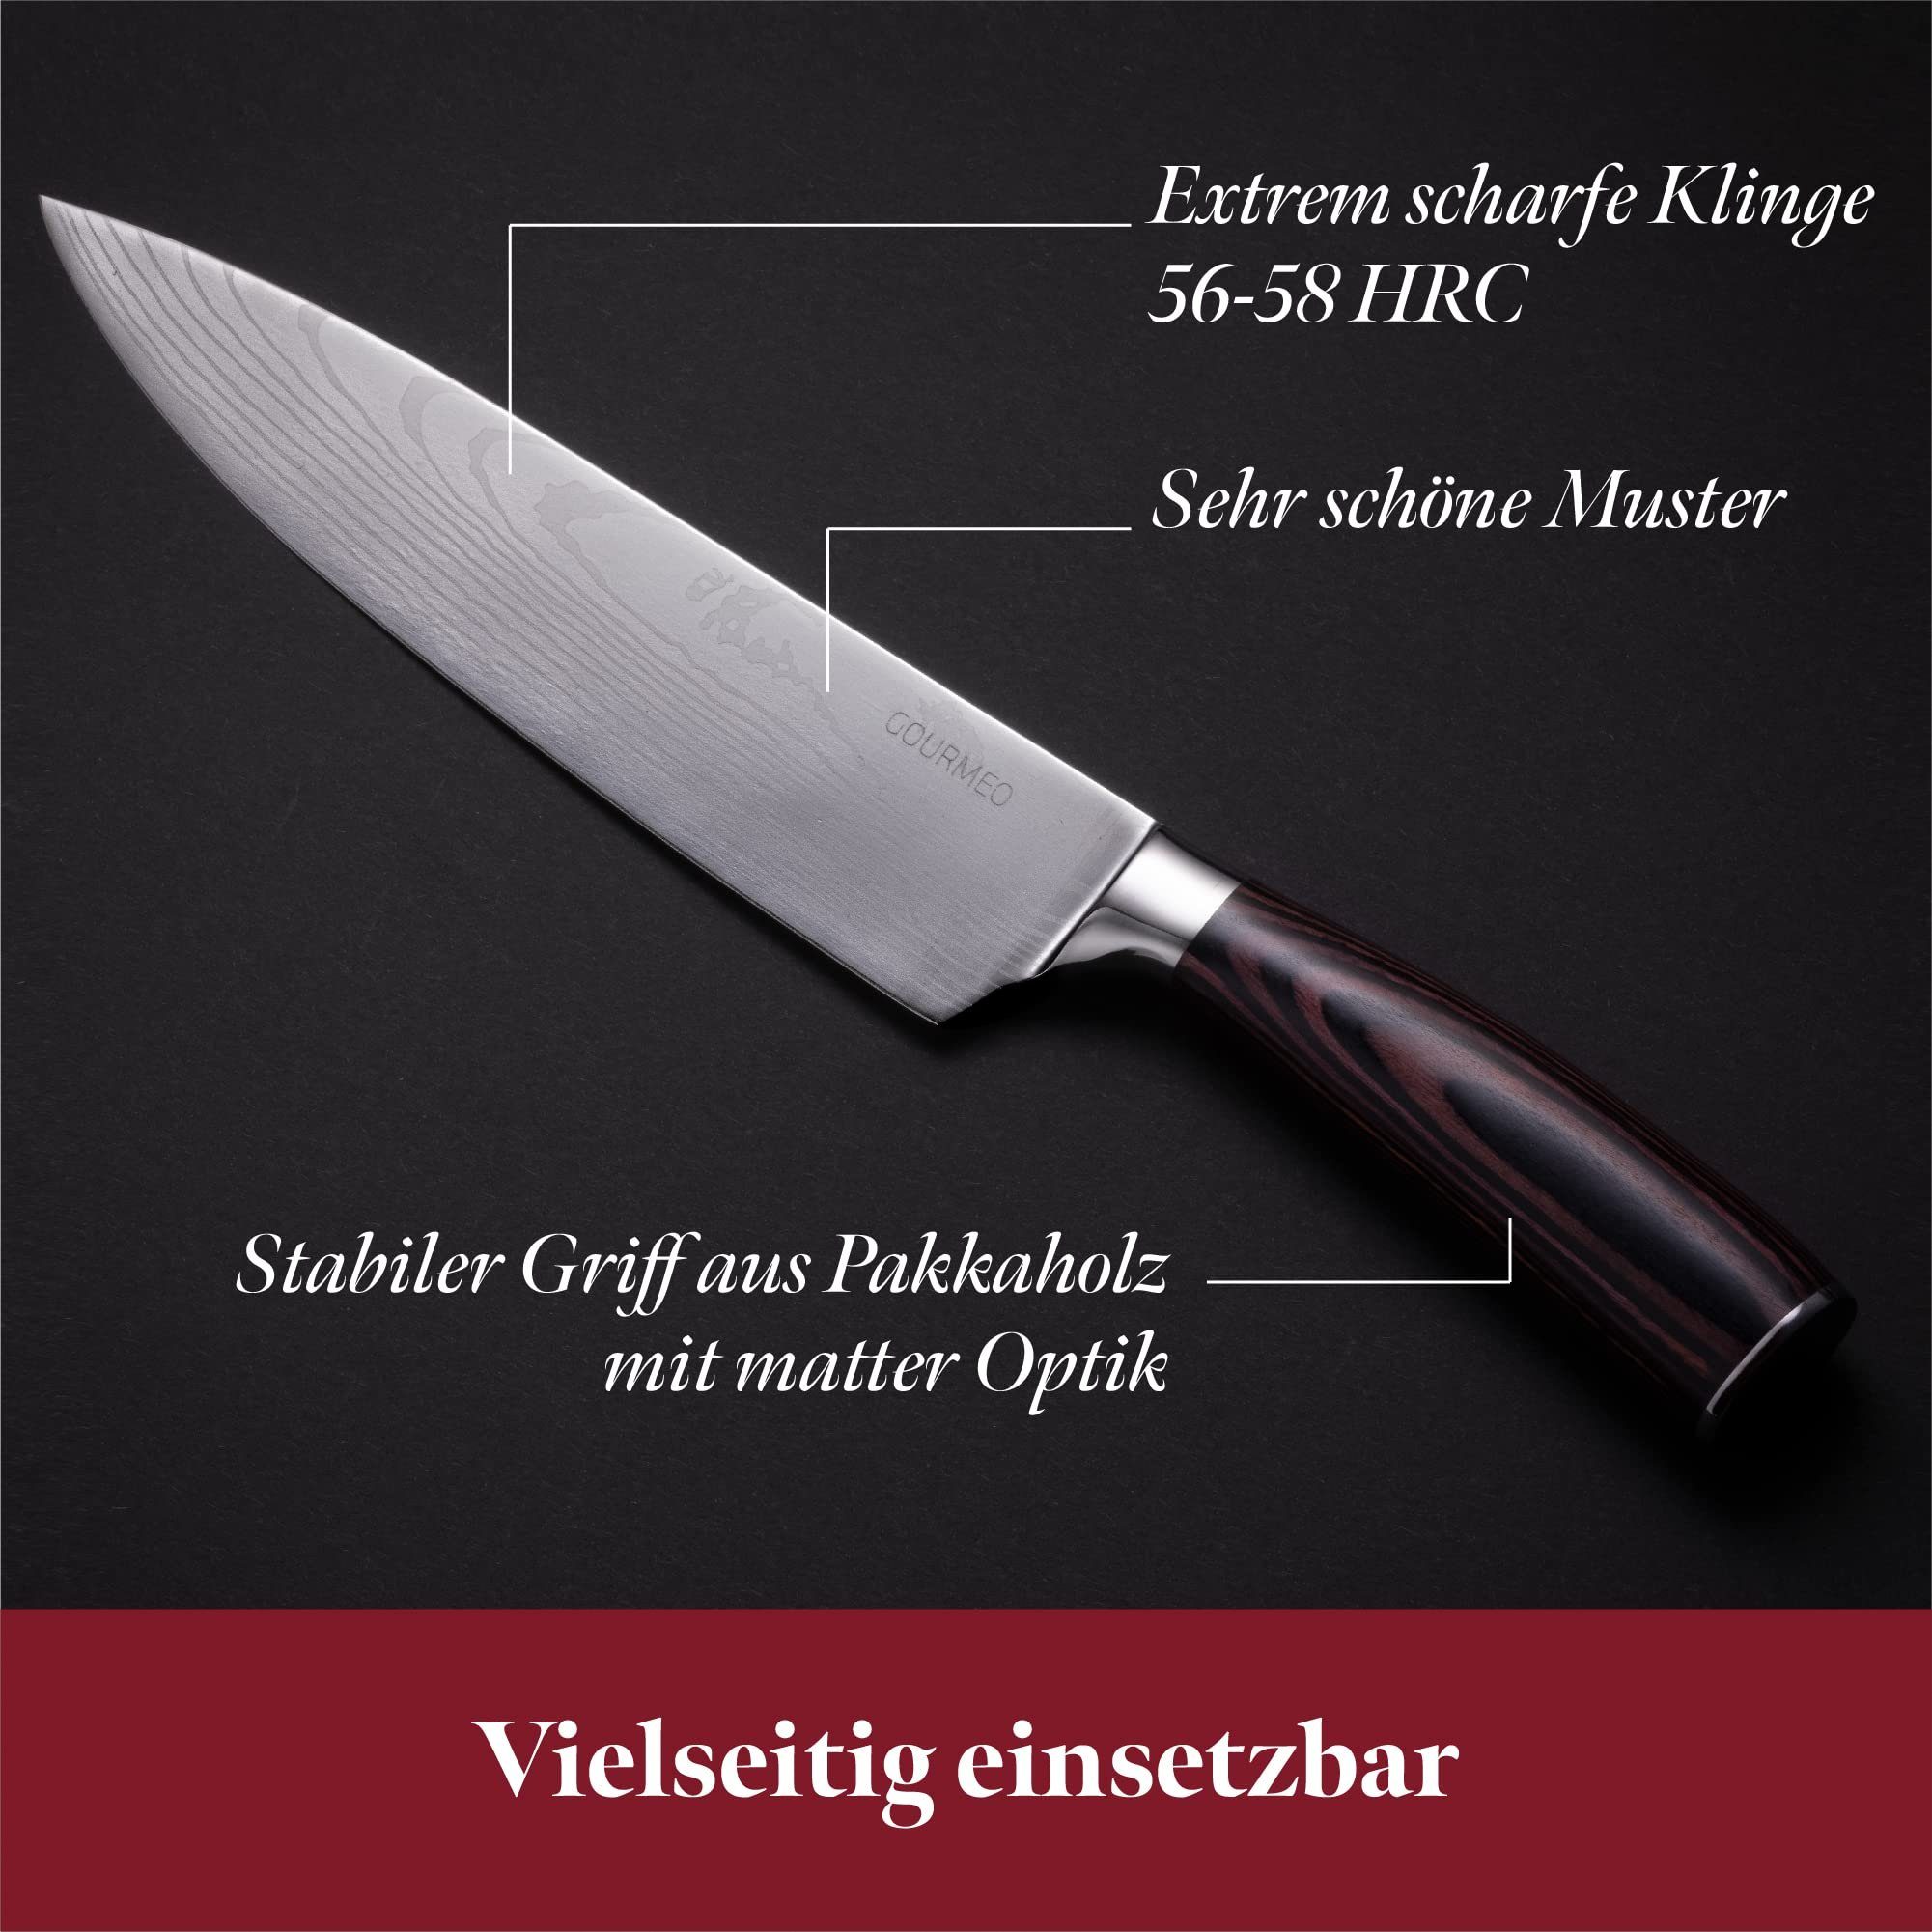 Profi Edelstahl Küchenmesser Messer - Holzgriff Professionelles Edelstahl Küchenmesser mit mit GOURMEO Holzgriff, Kochmesser